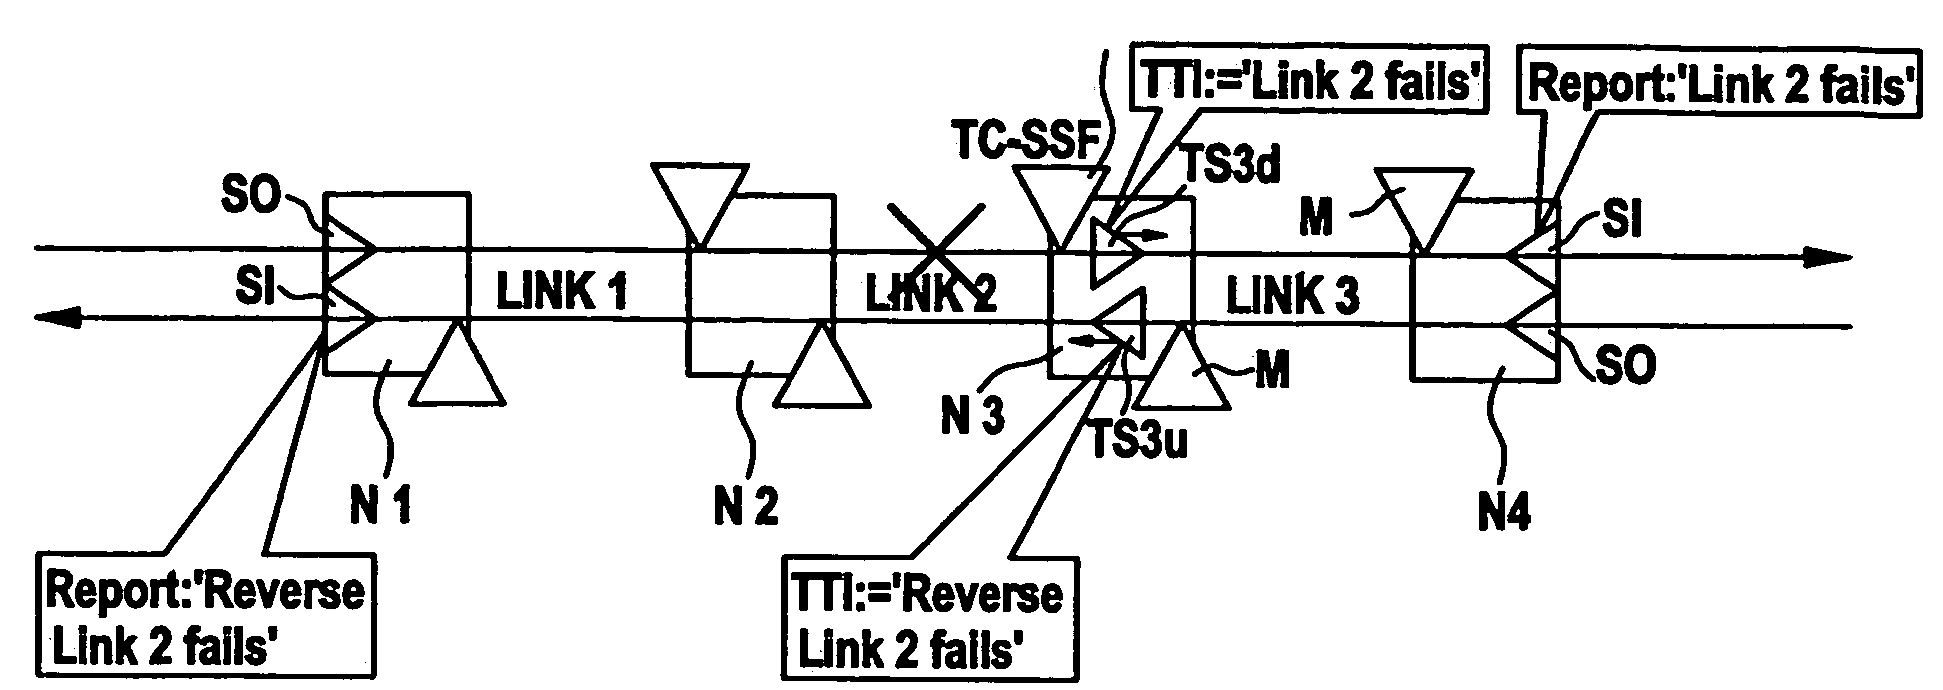 Failure localization in a transmission network